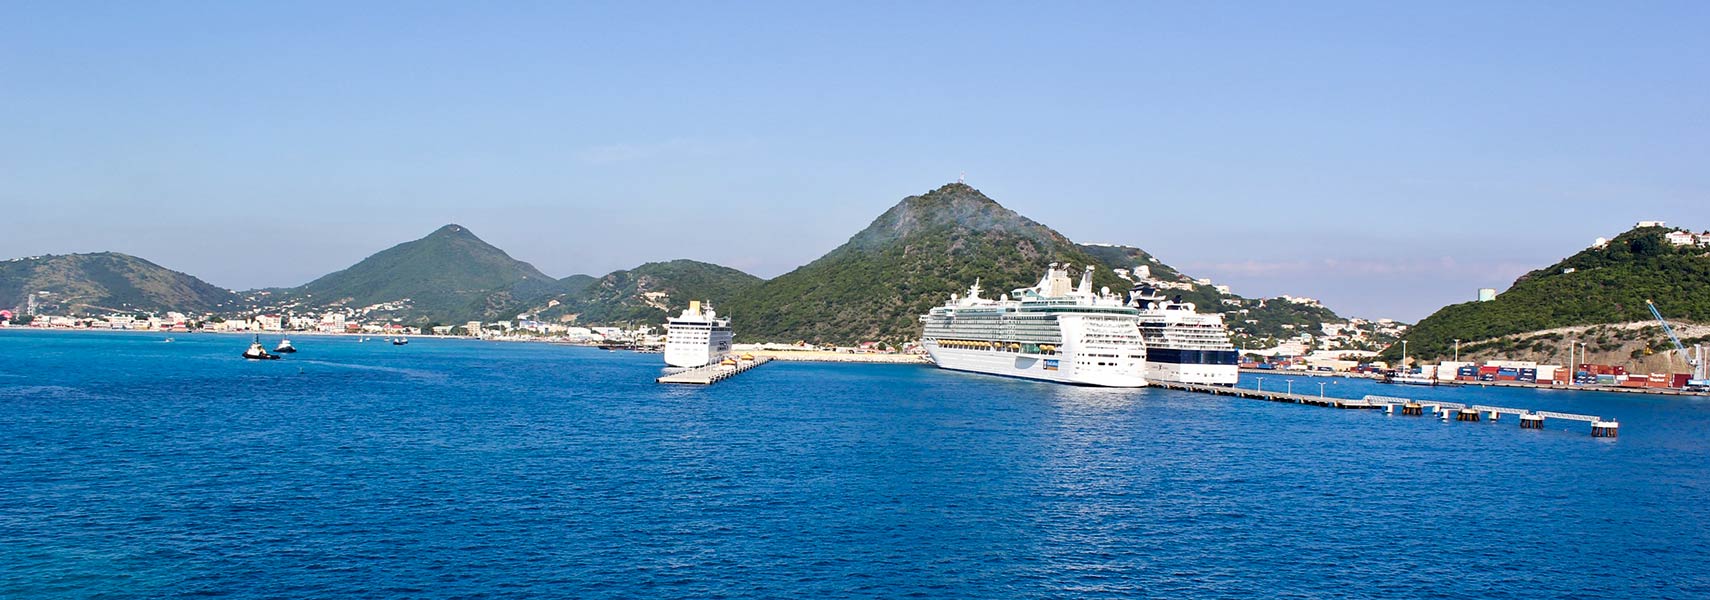 Cruise ship harbor St Maarten (St Martin) island)